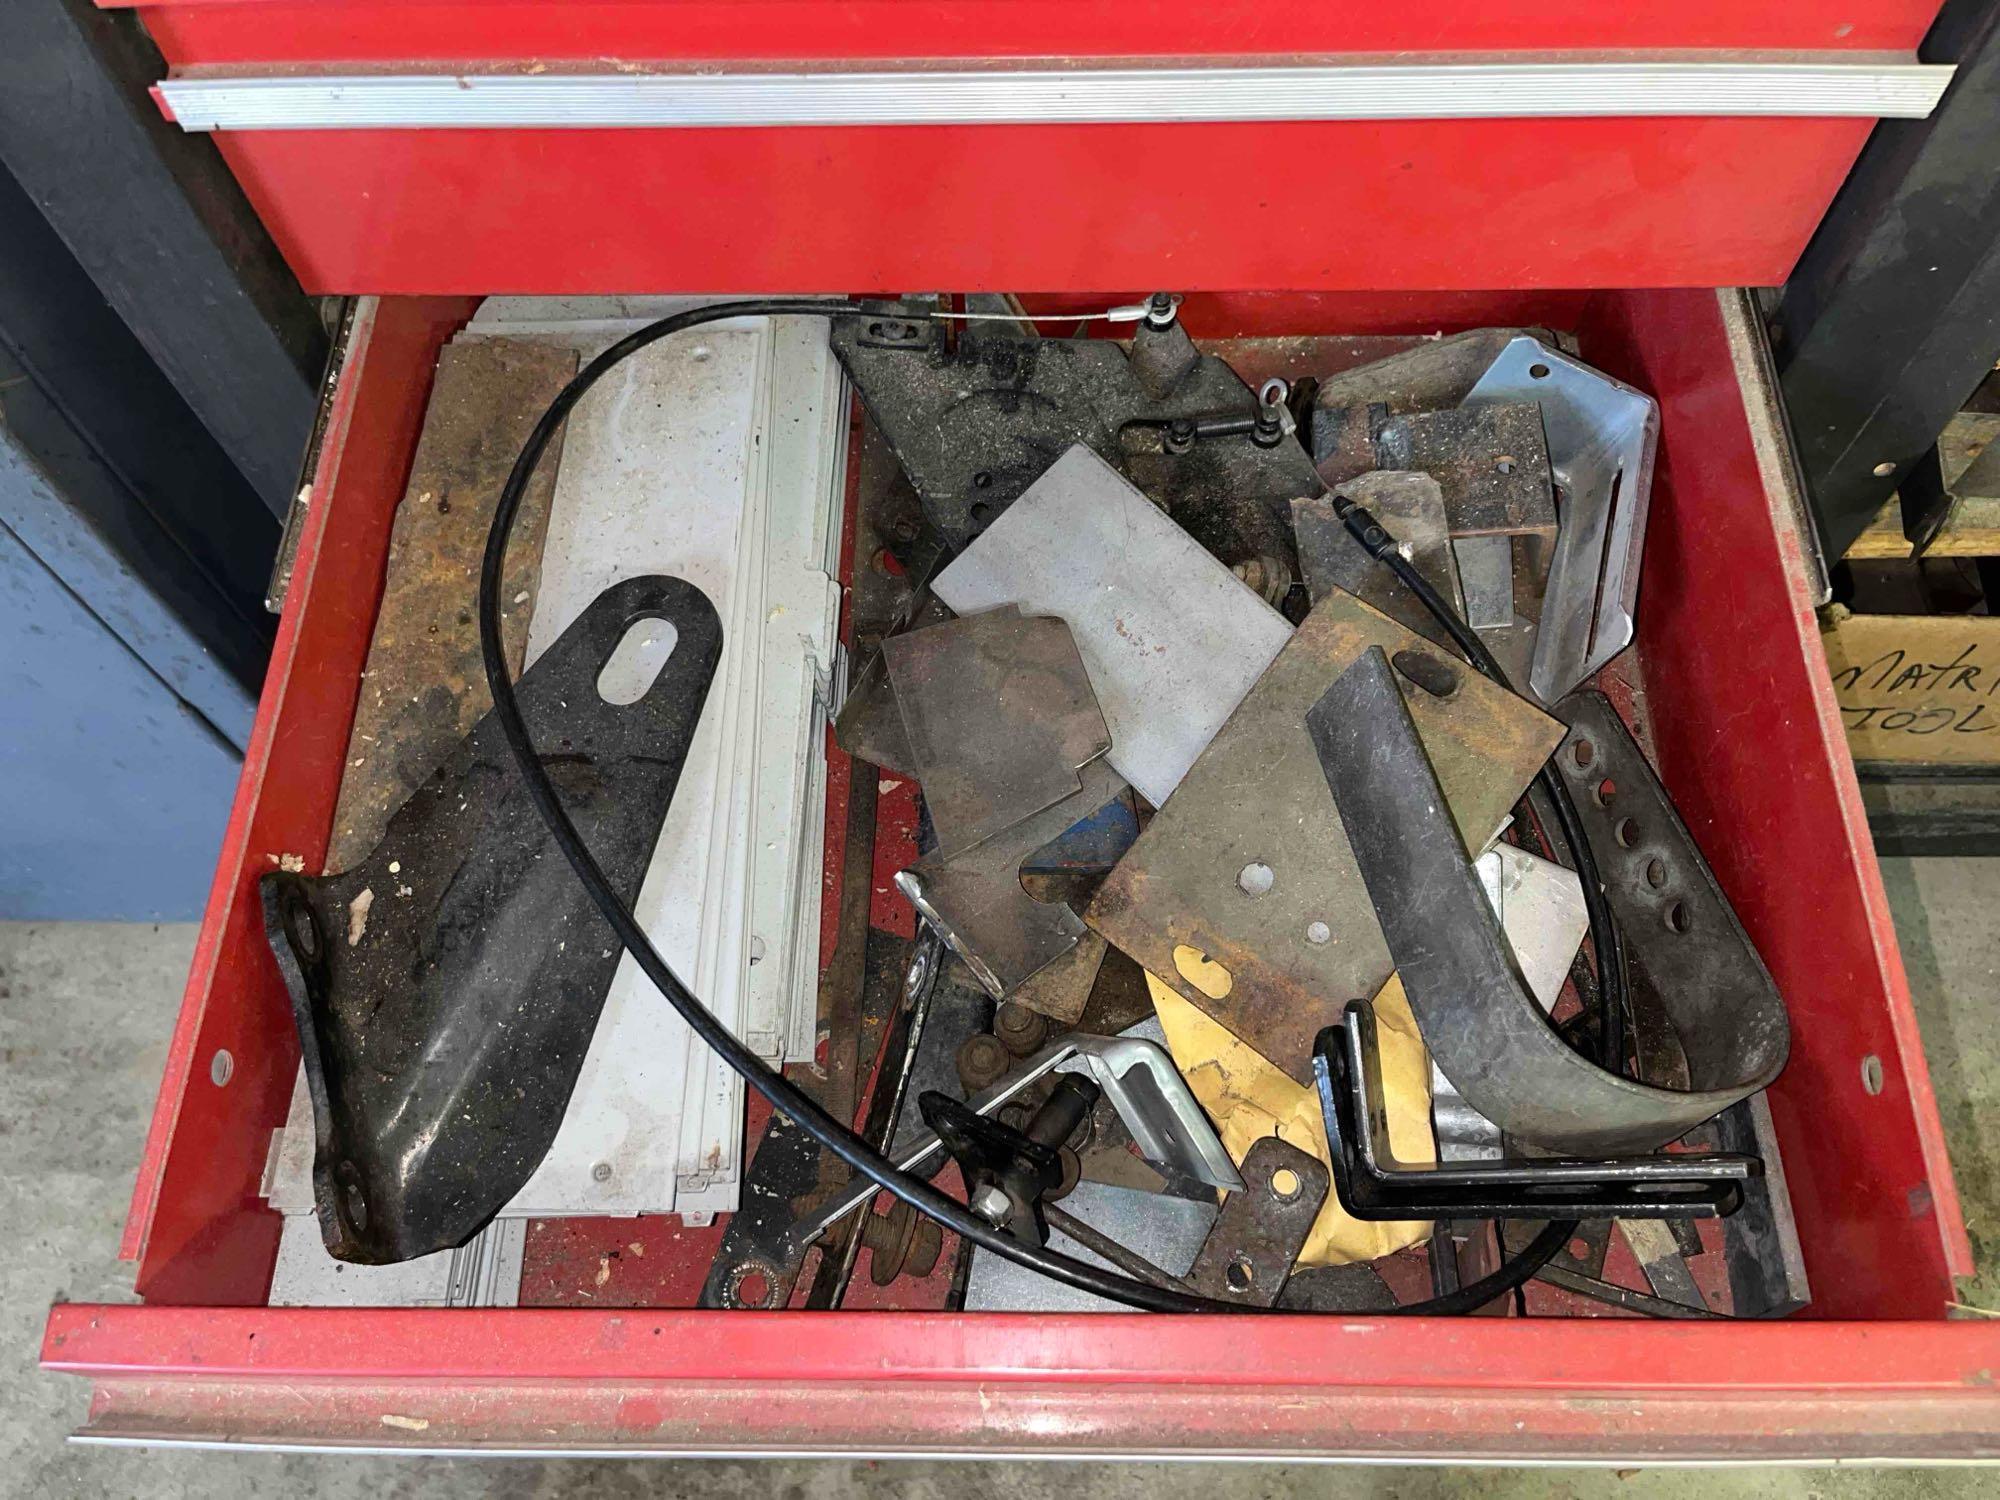 Iron, Scrap Metal, Bottom Contents of Workbench